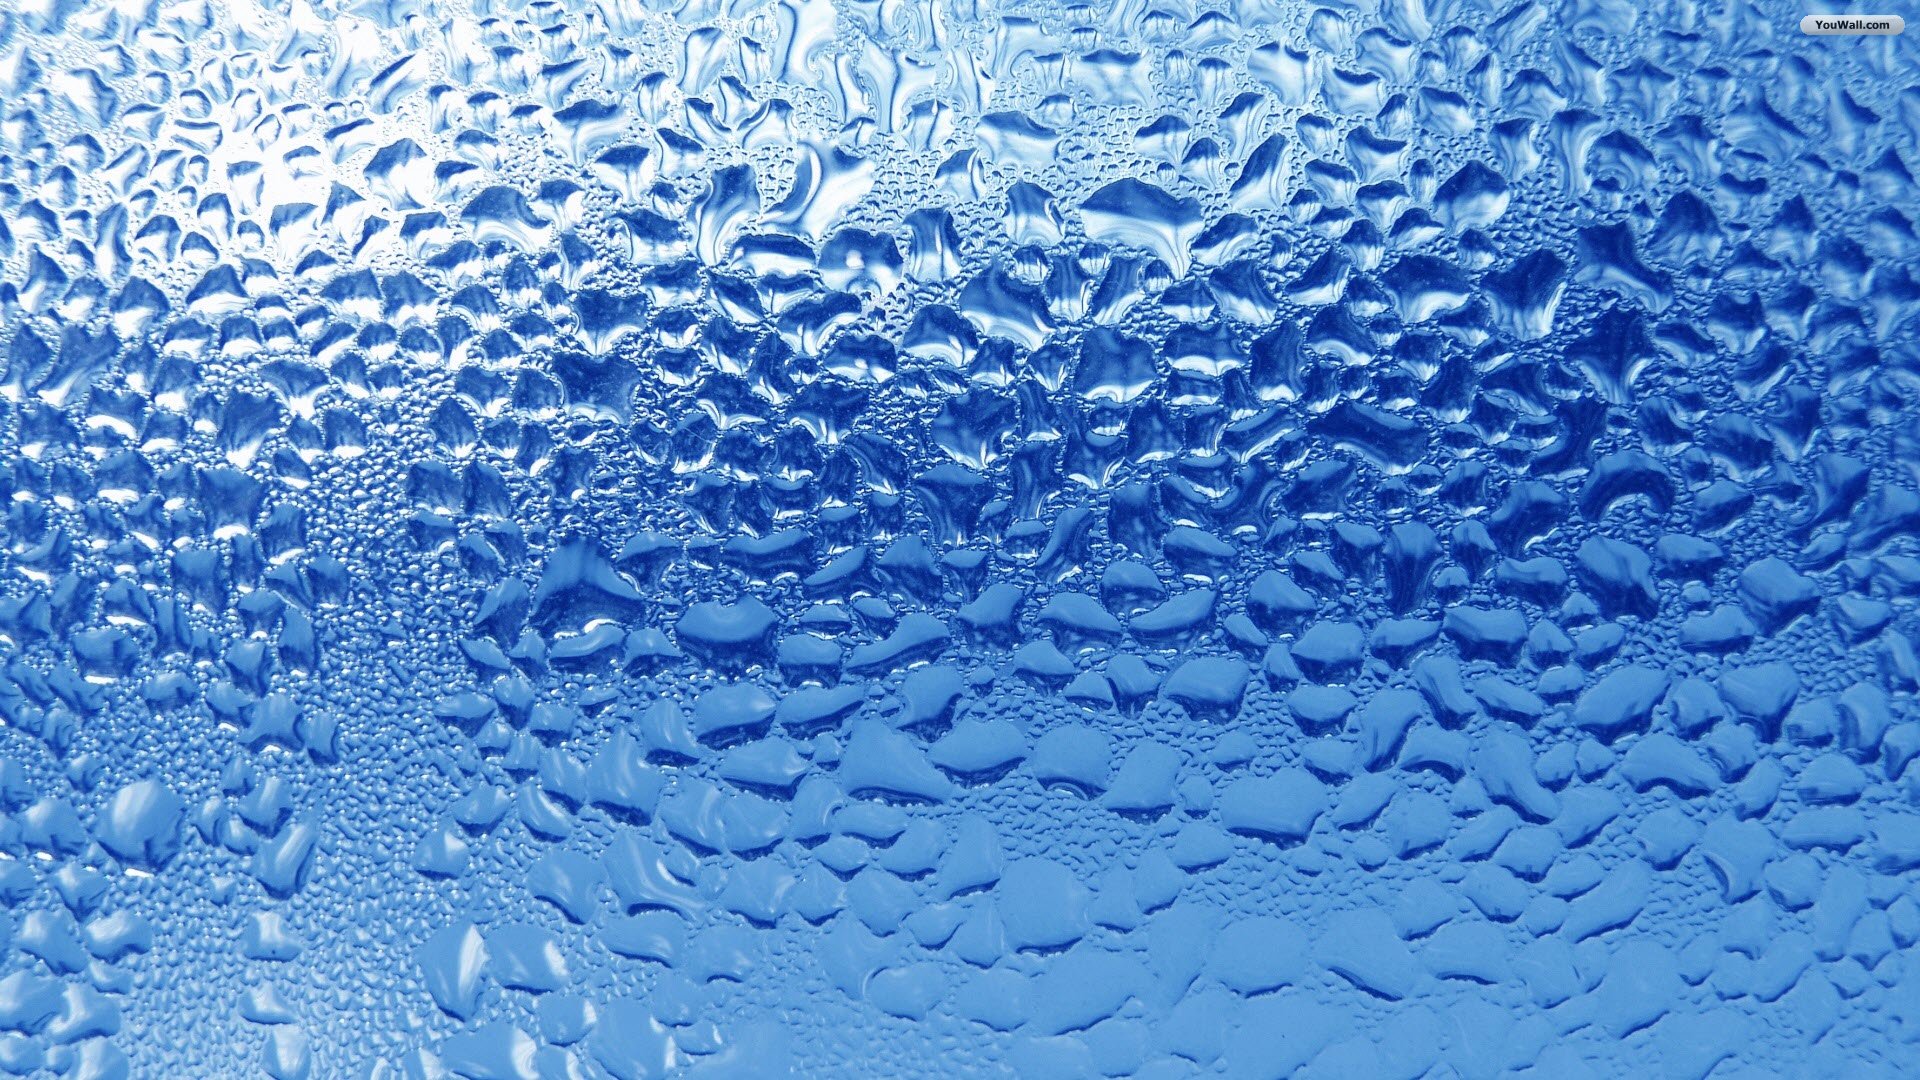 YouWall   Water Drops Wallpaper   wallpaperwallpapersfree wallpaper